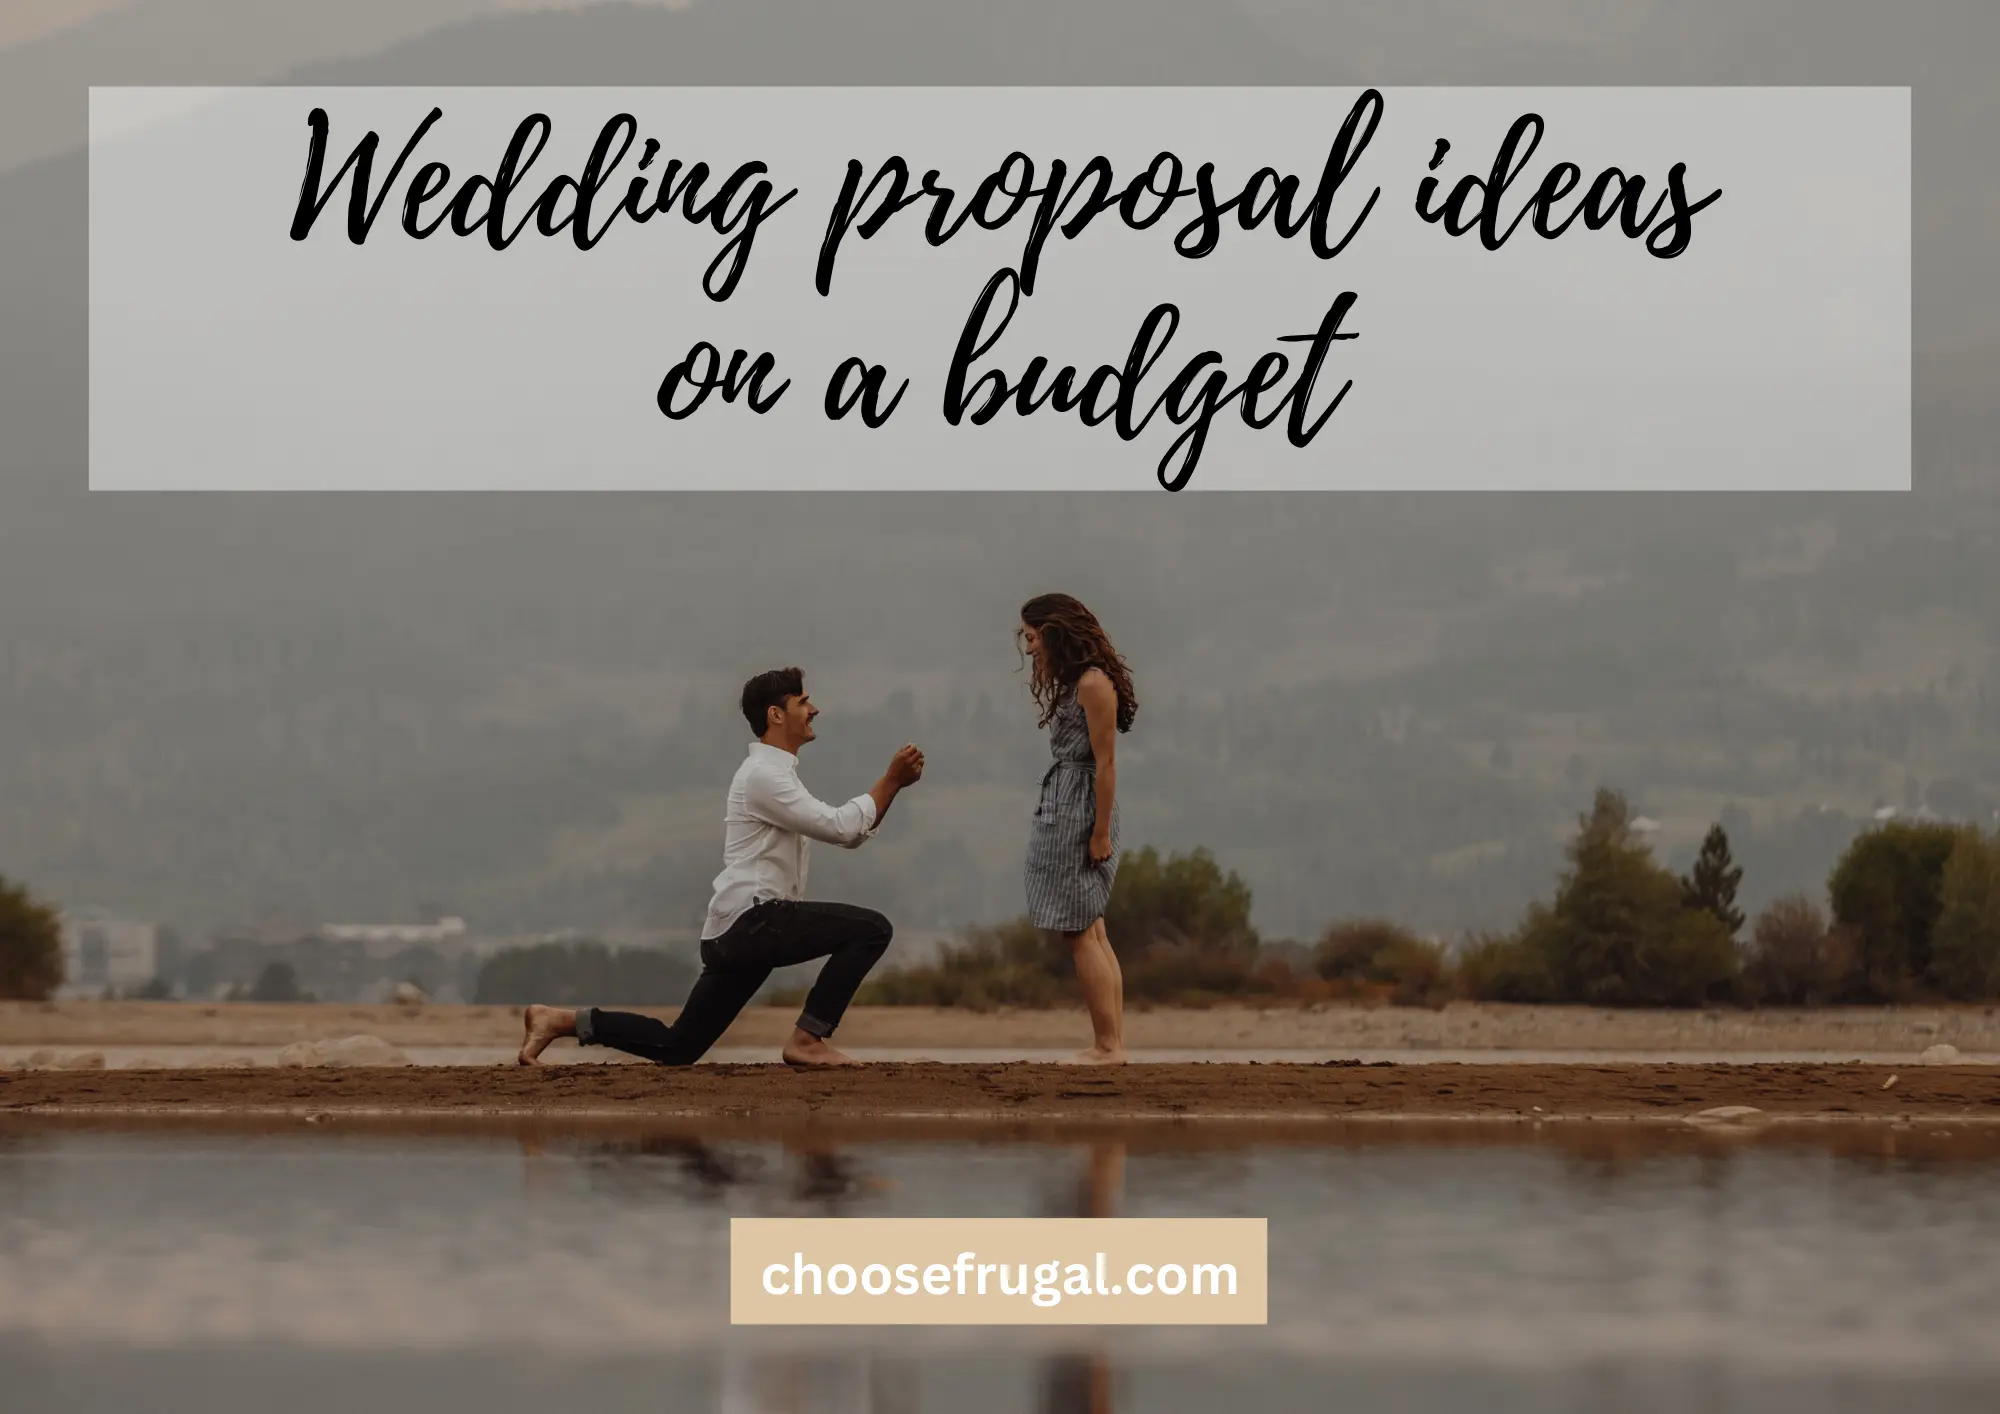 Man proposing to woman on a beach. Budget friendly proposal ideas.